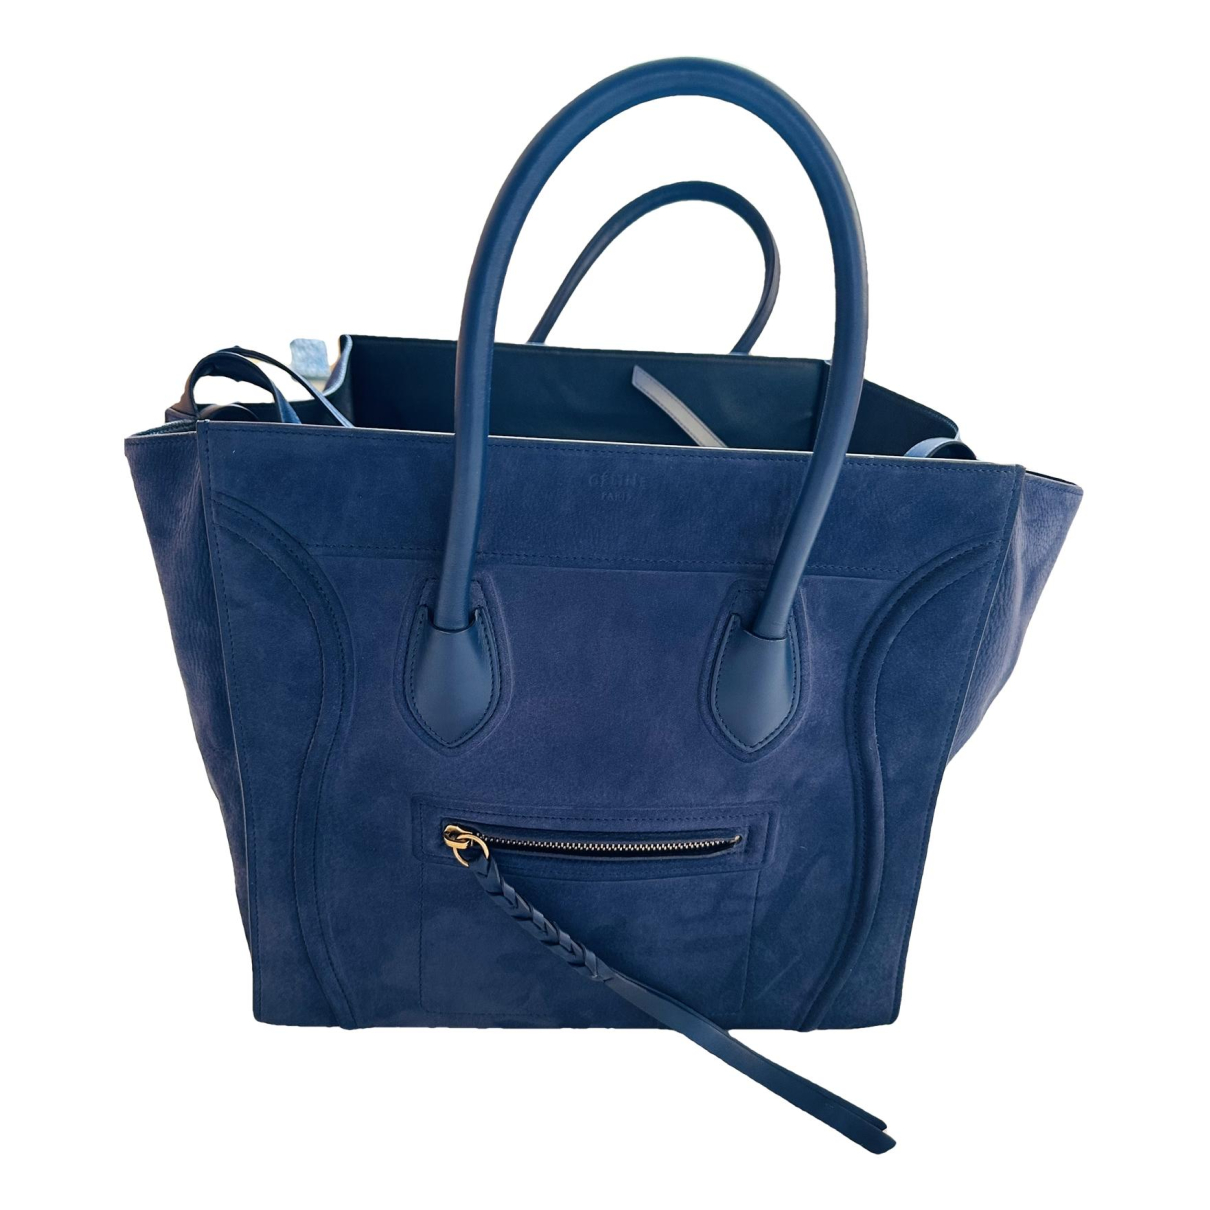 image of Celine Luggage Phantom leather handbag